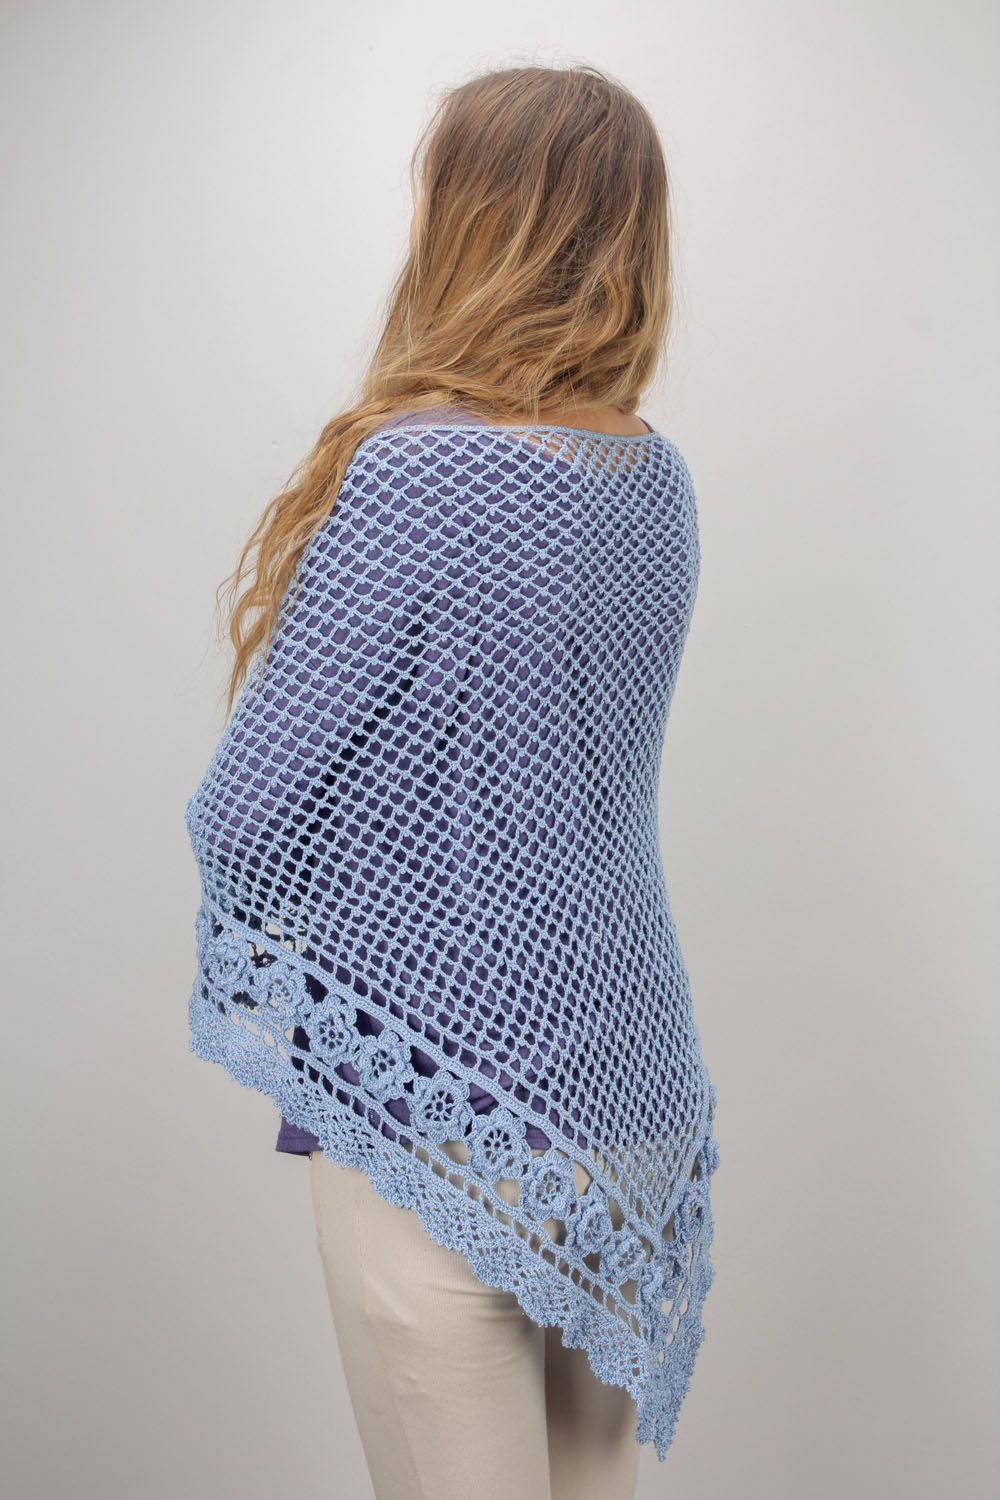 Crochet blue shawl photo 4